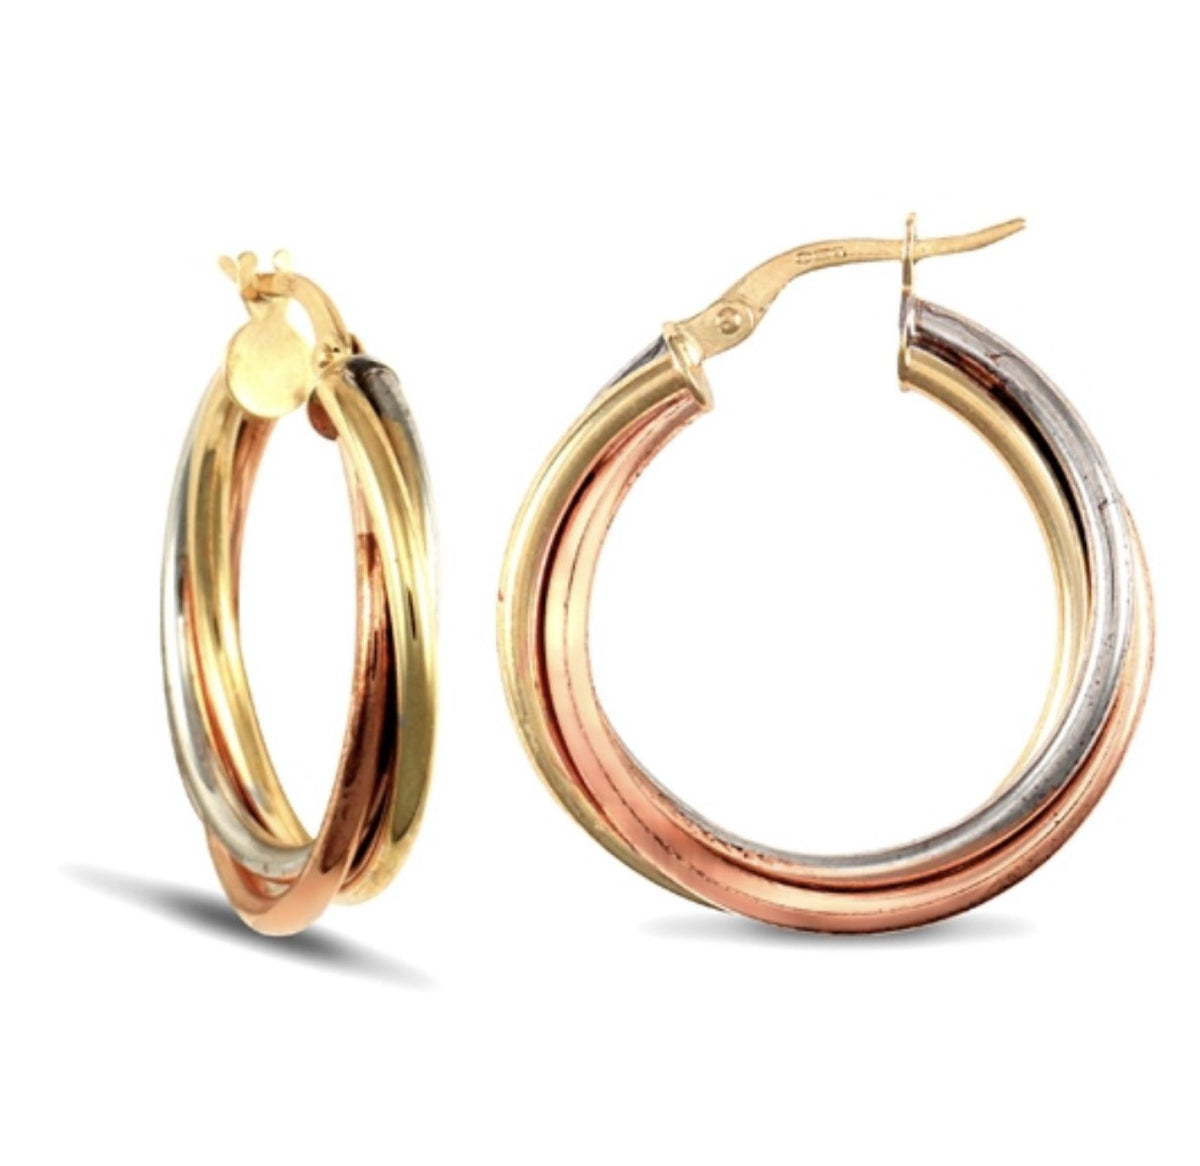 3 colour gold twist hoop earrings 2g